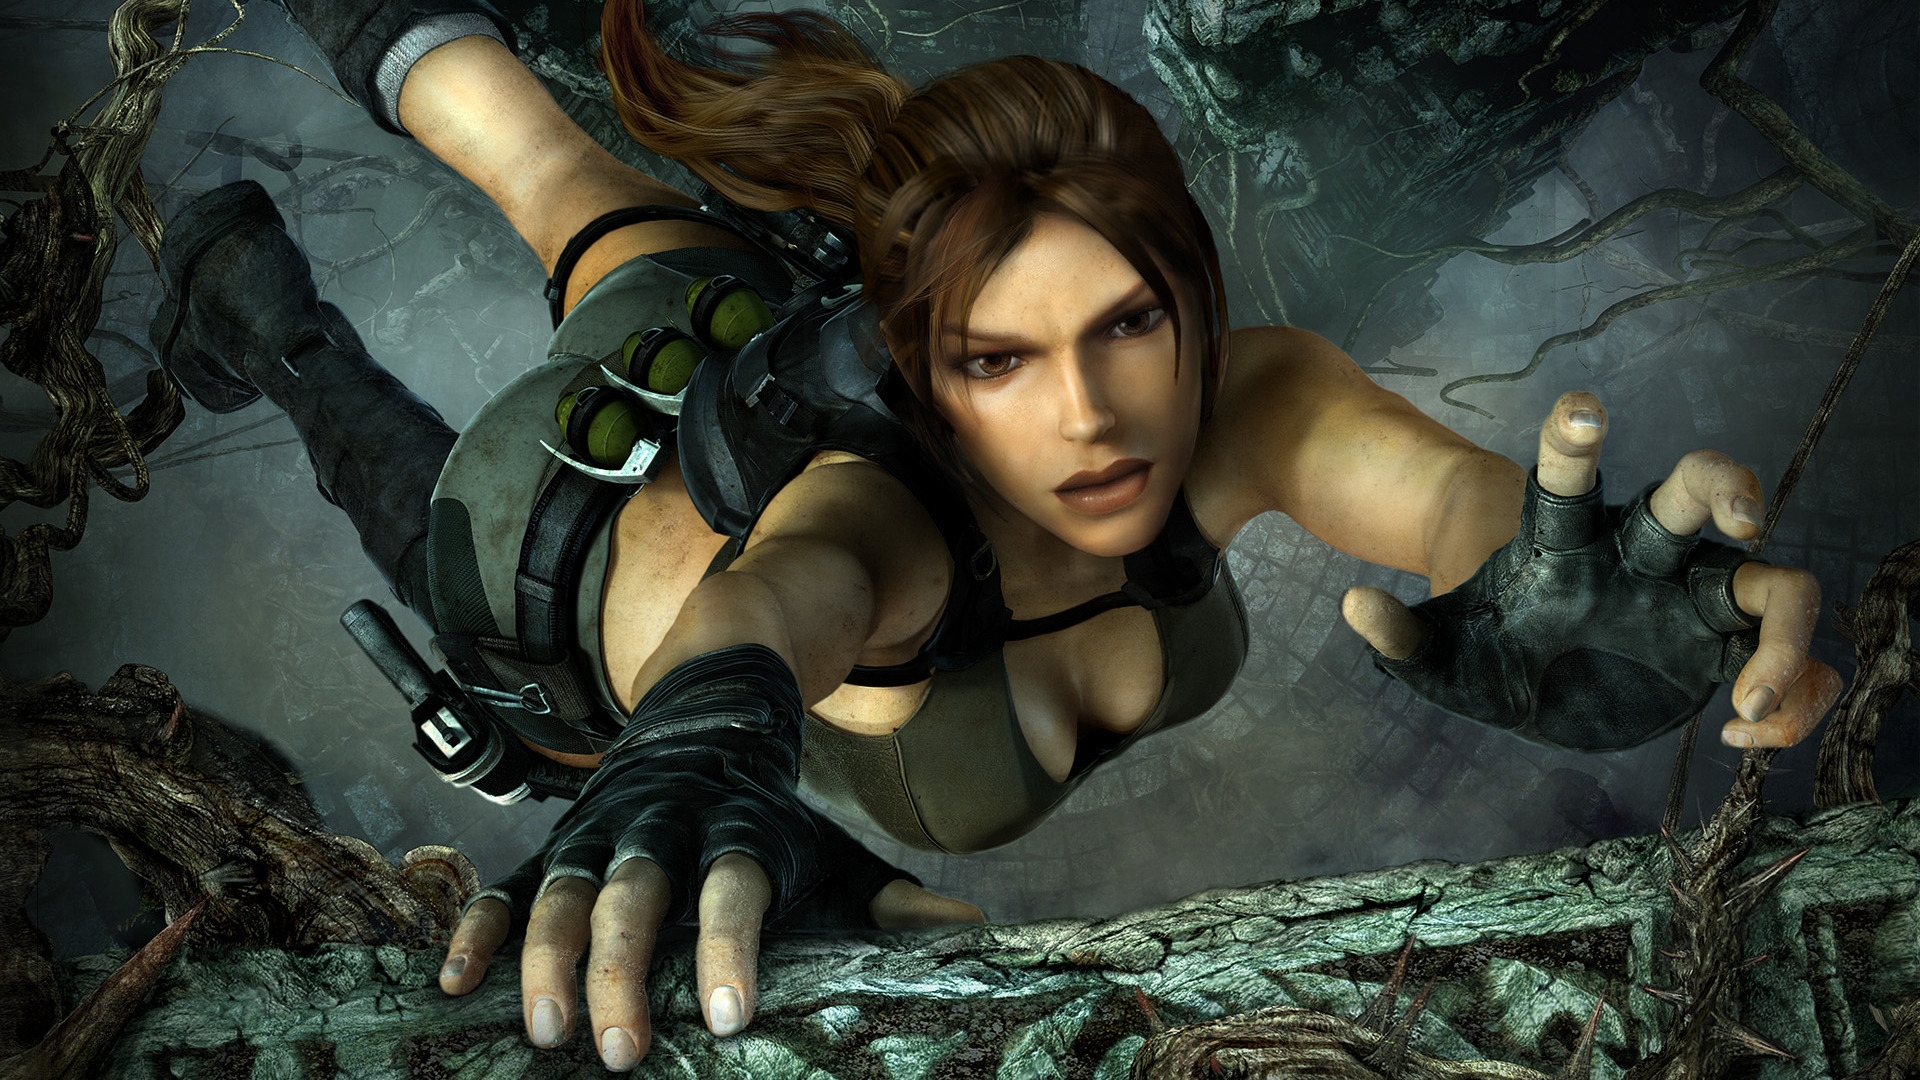 Lara Croft On The Edge for 1920 x 1080 HDTV 1080p resolution